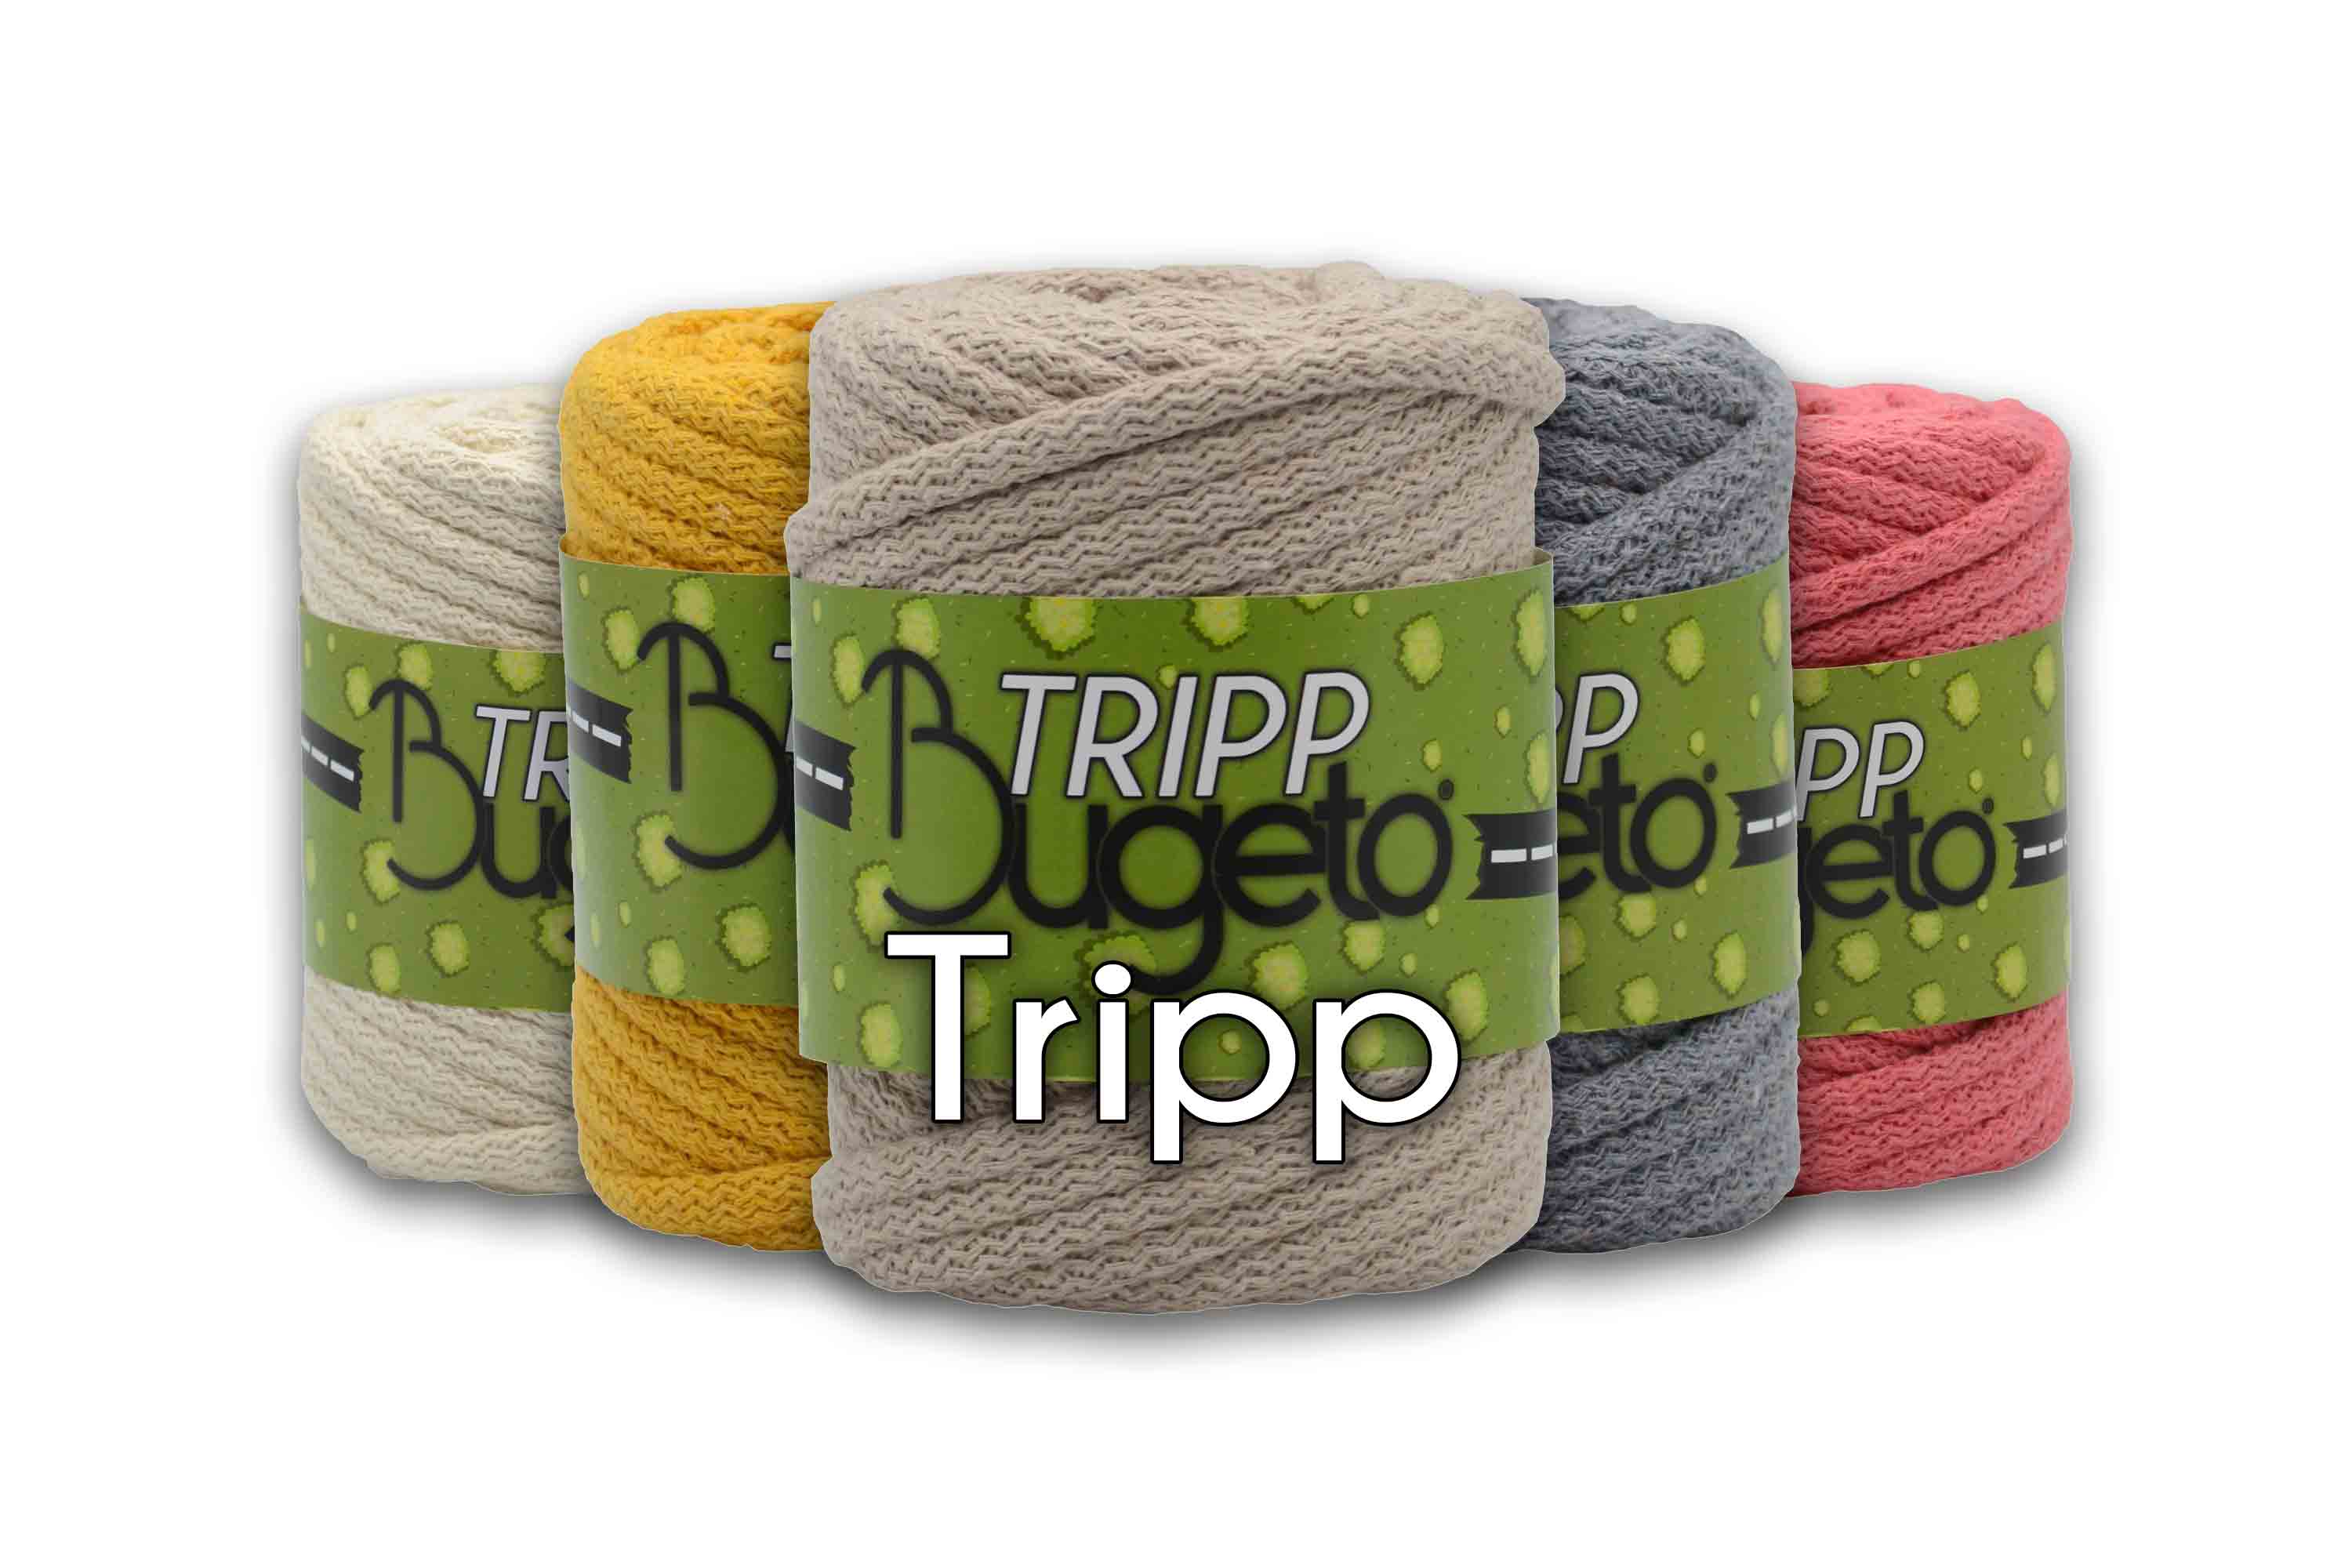 tripp yarn for sewing machine cotton filled 9mm cotton inside soft sewing yarn bugeto yarn